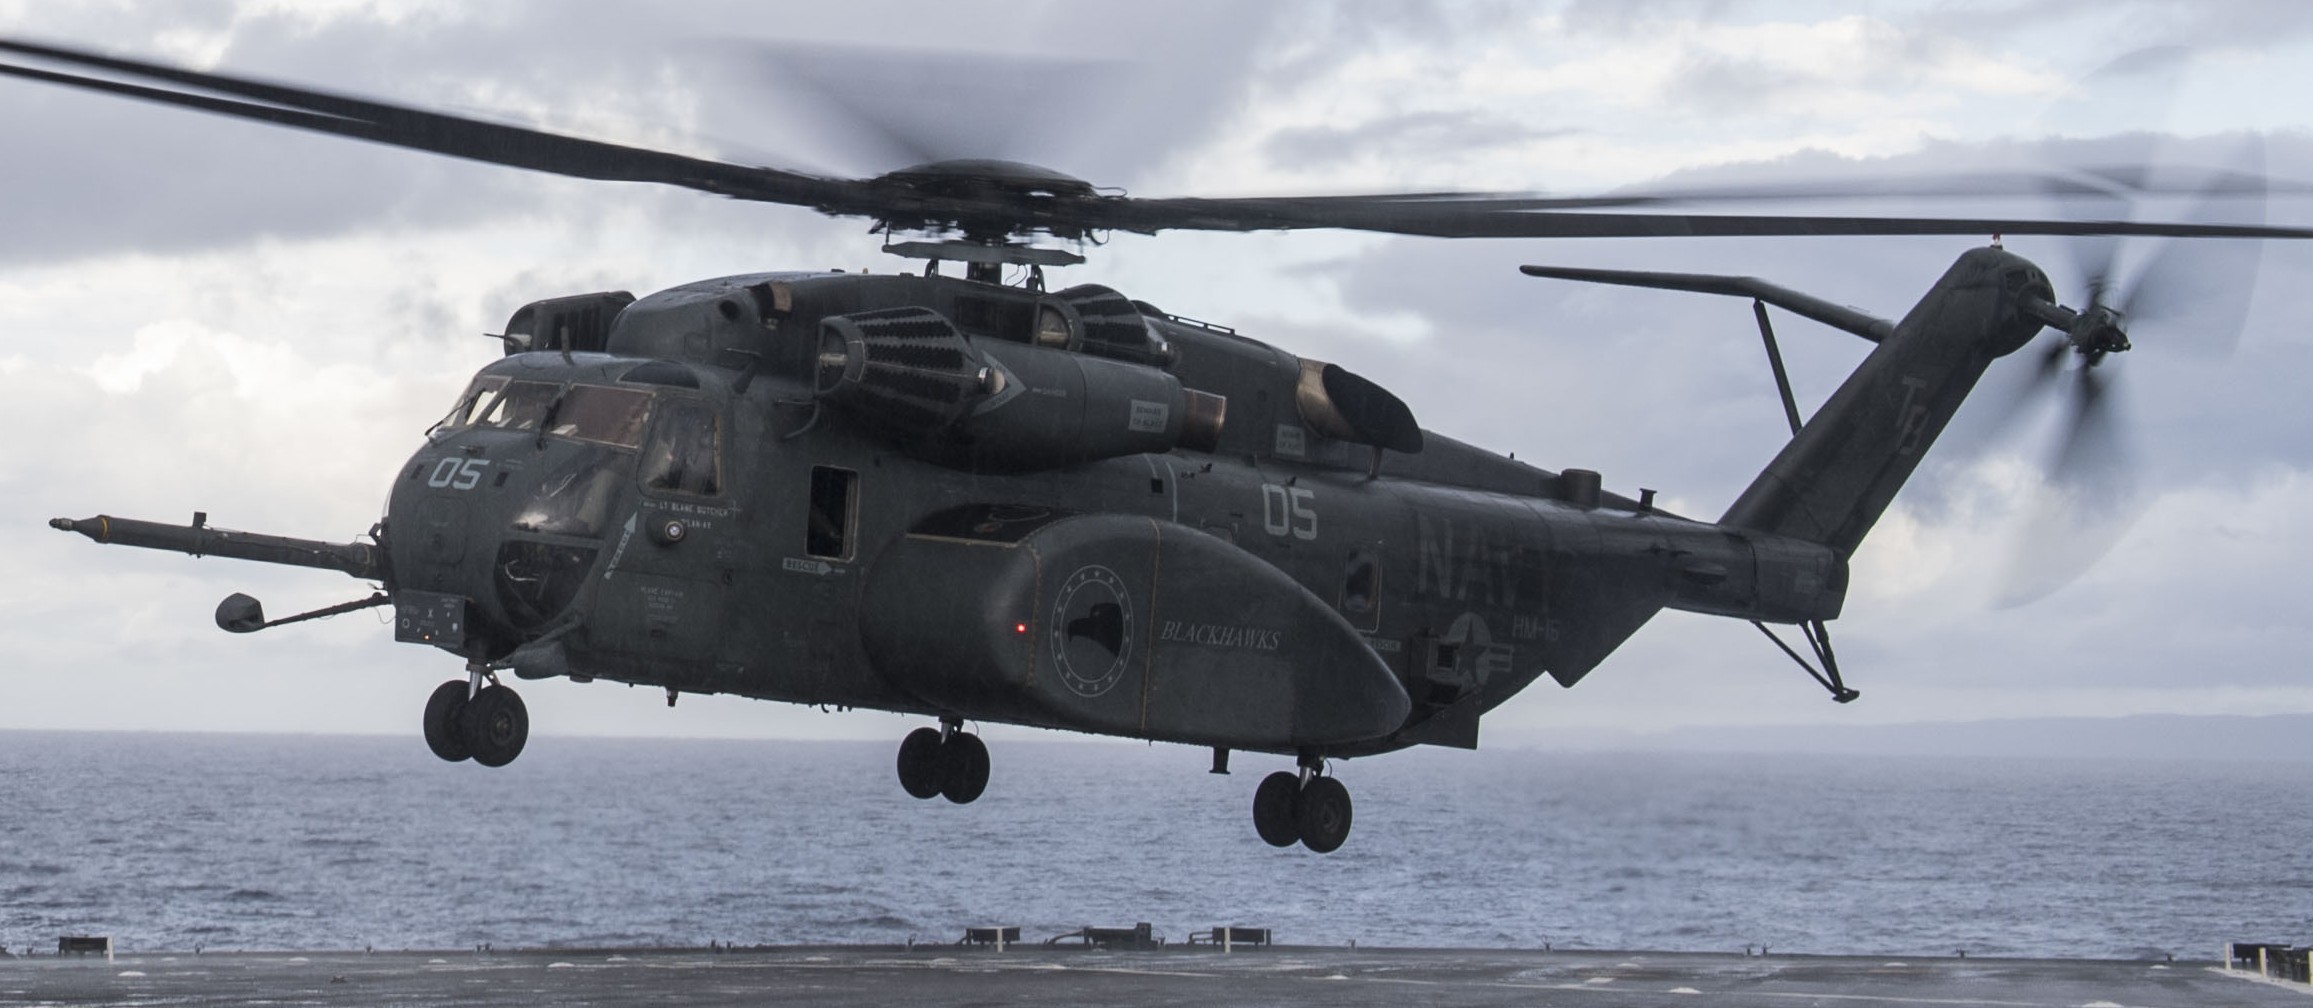 hm-15 blackhawks helicopter mine countermeasures squadron navy mh-53e sea dragon 09 uss oak hill lsd-51